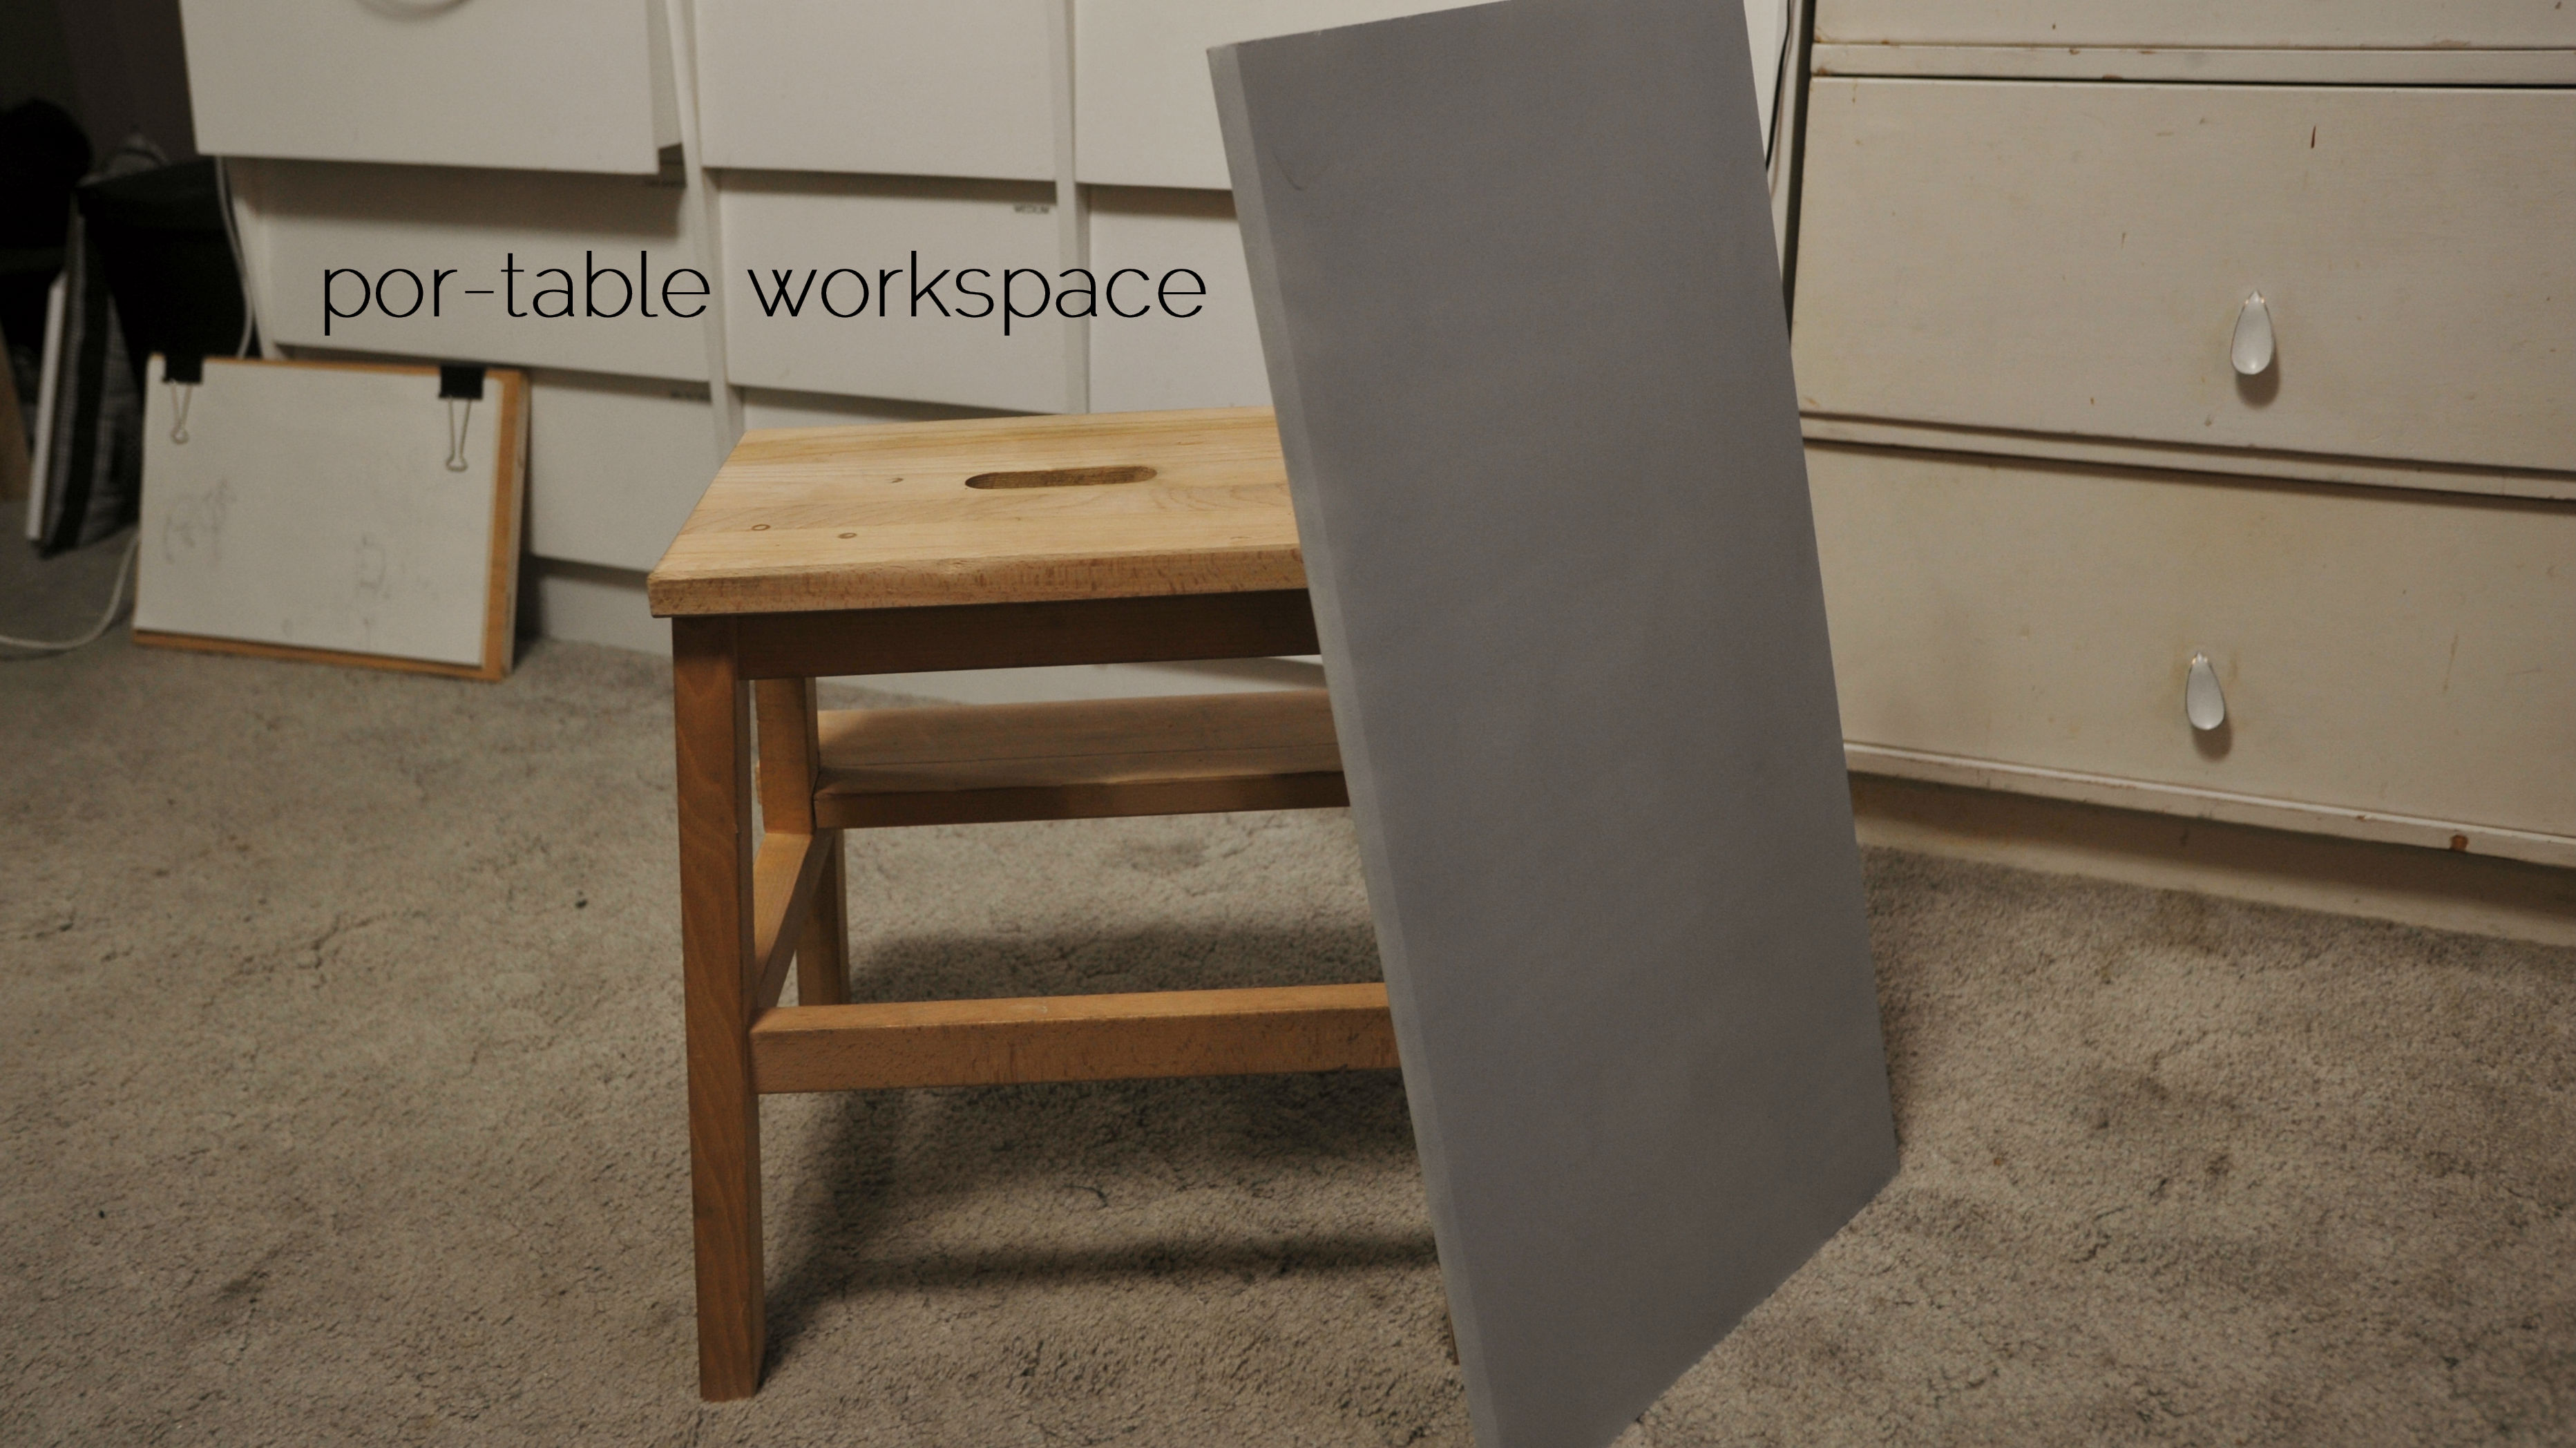 Stool Enhancement: Portable workspace